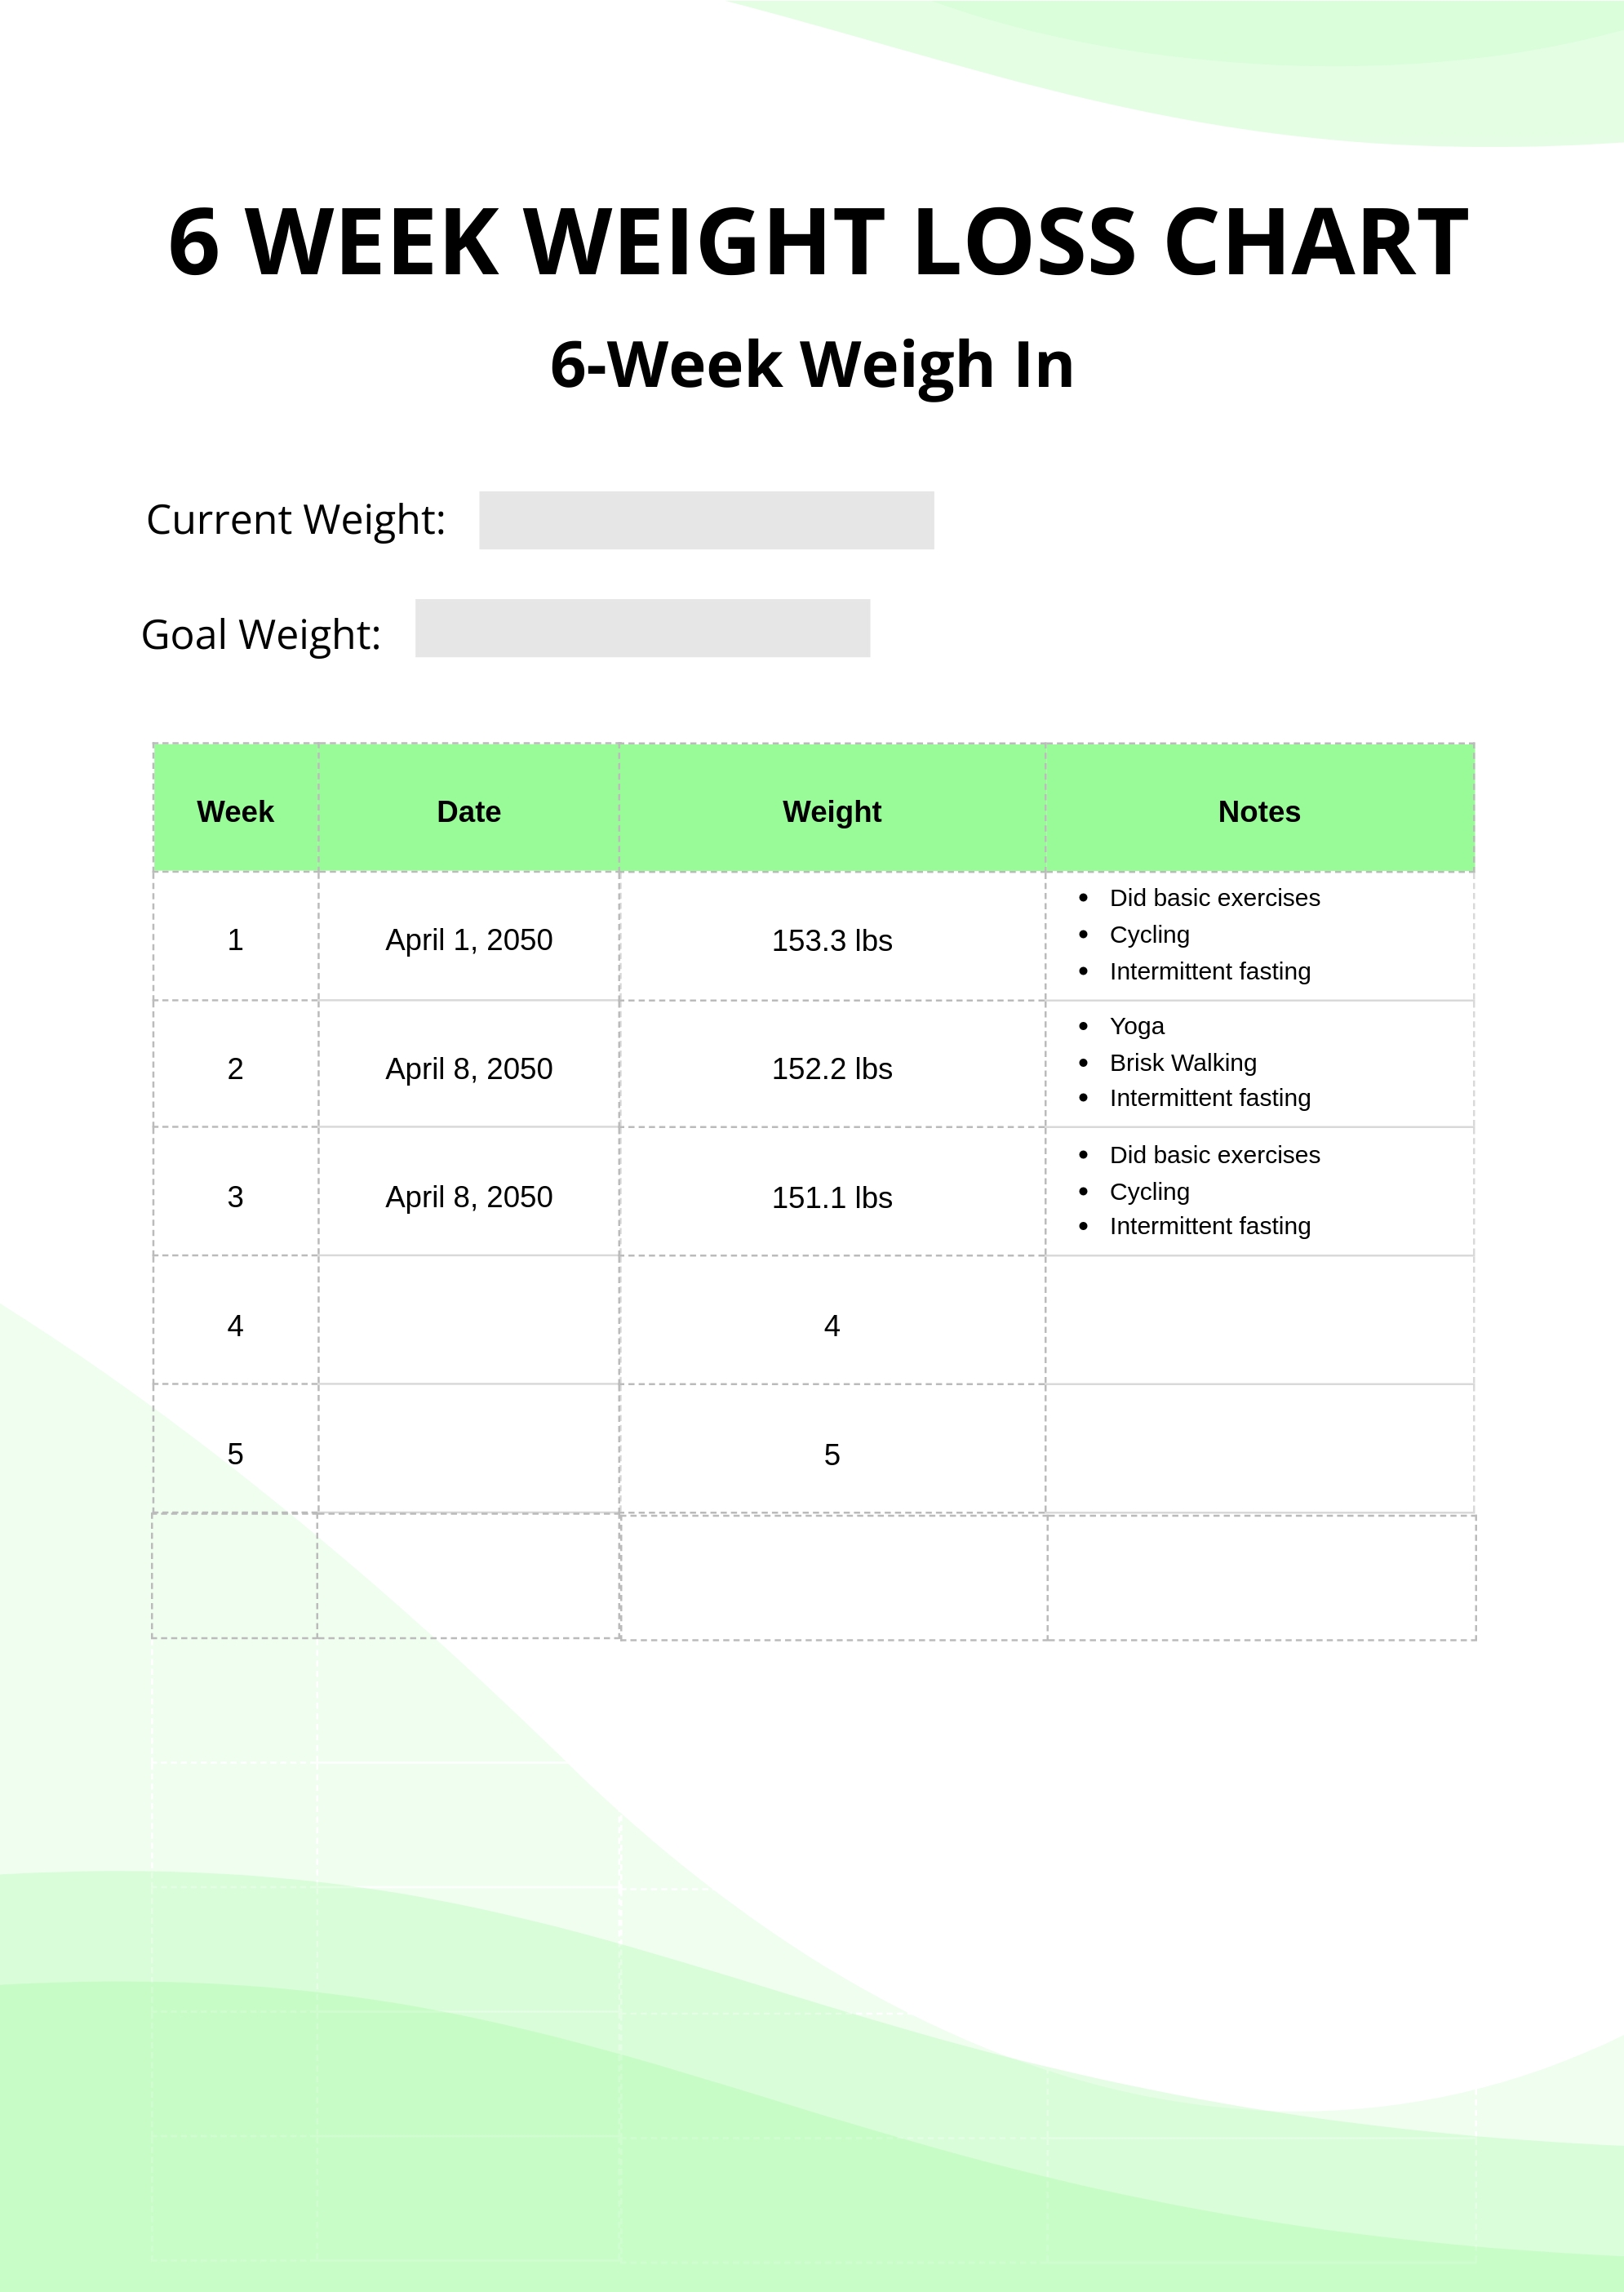 6 Week Weight Loss Chart in PDF, Illustrator